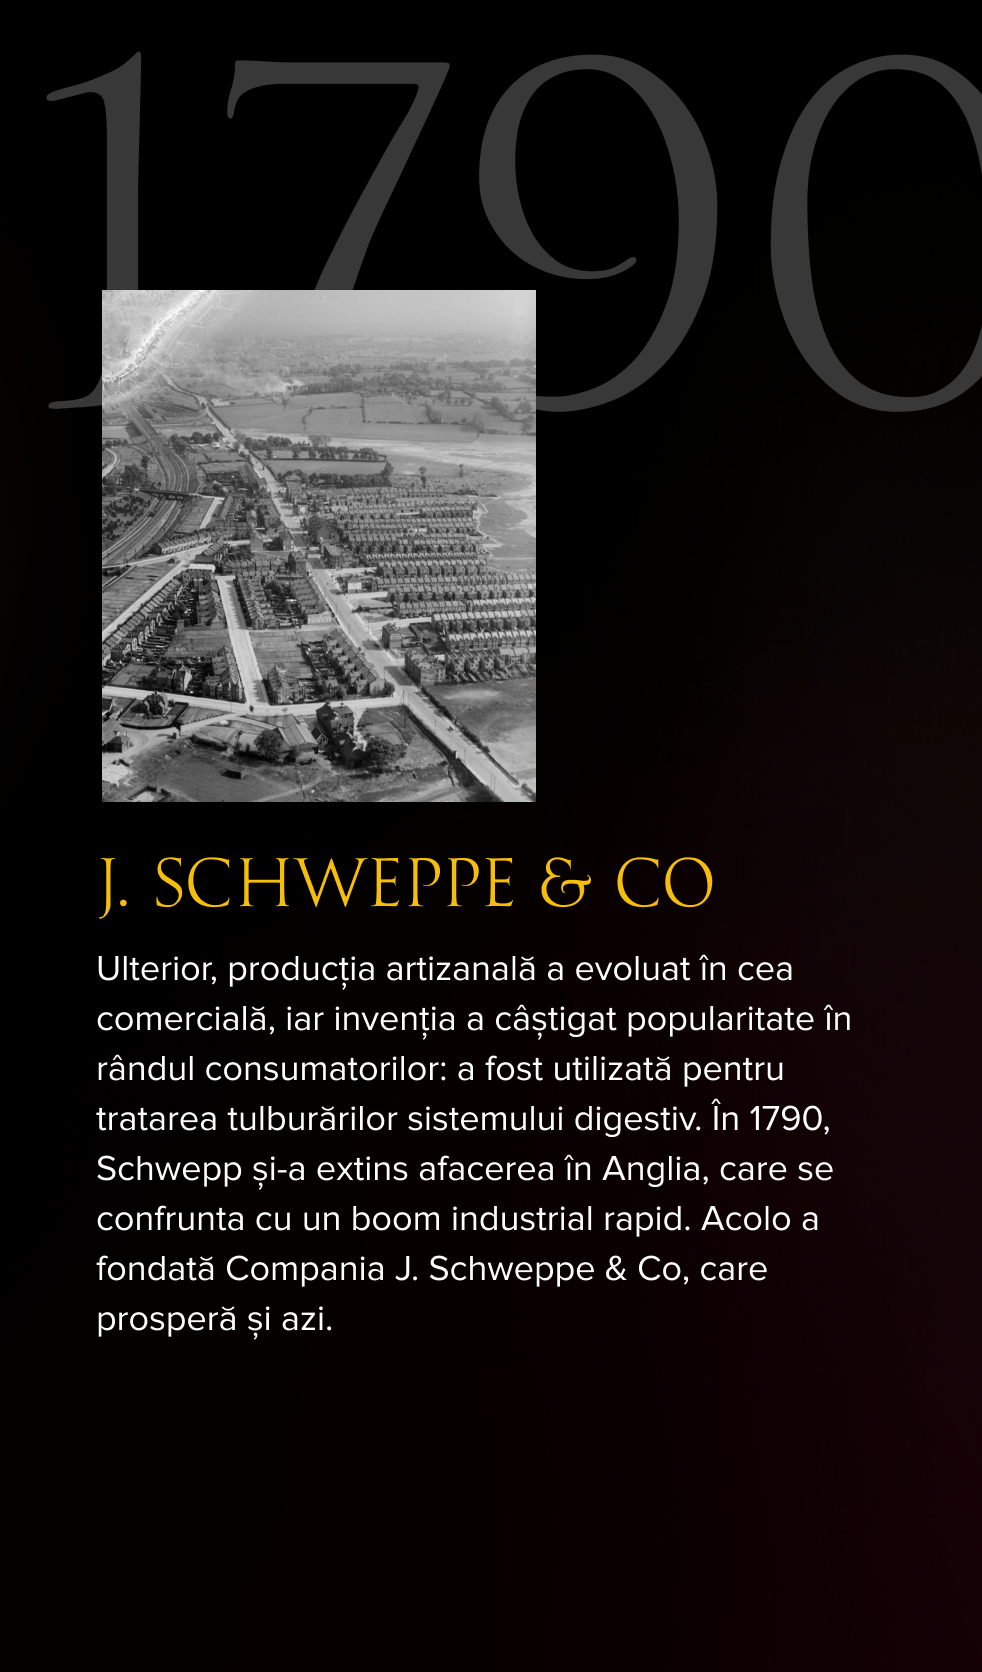 Istoria Schweppes - fabrica